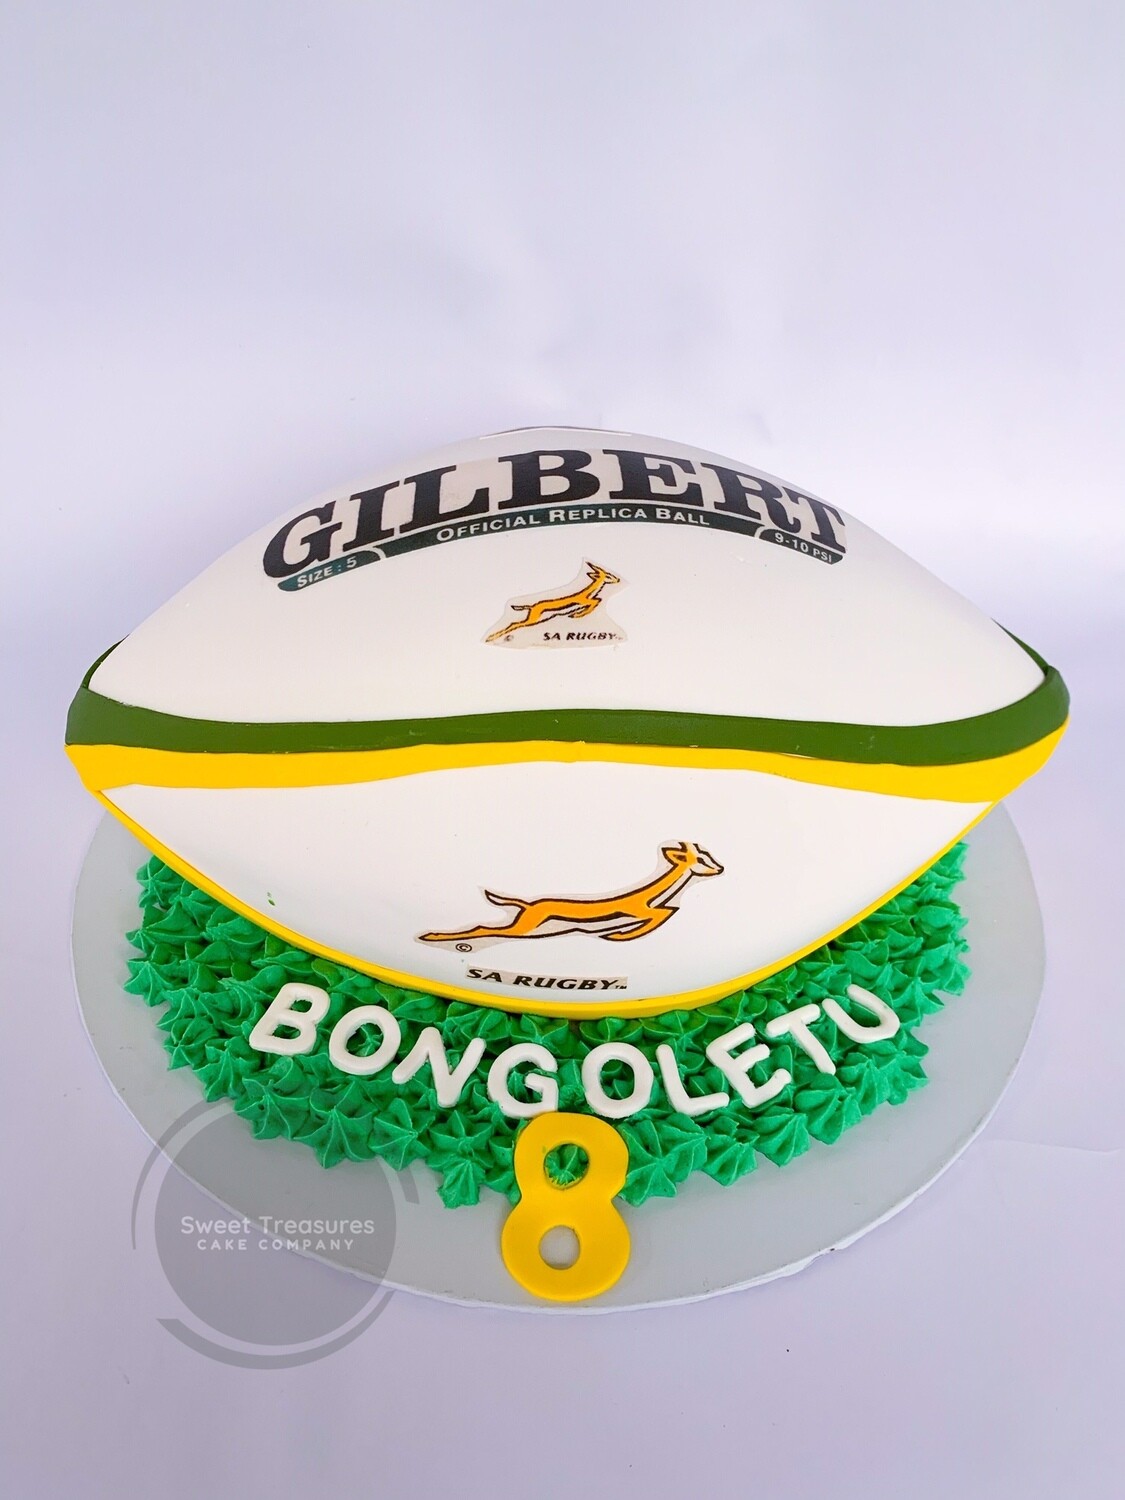 Rugby Shirt Cake | Birthdays